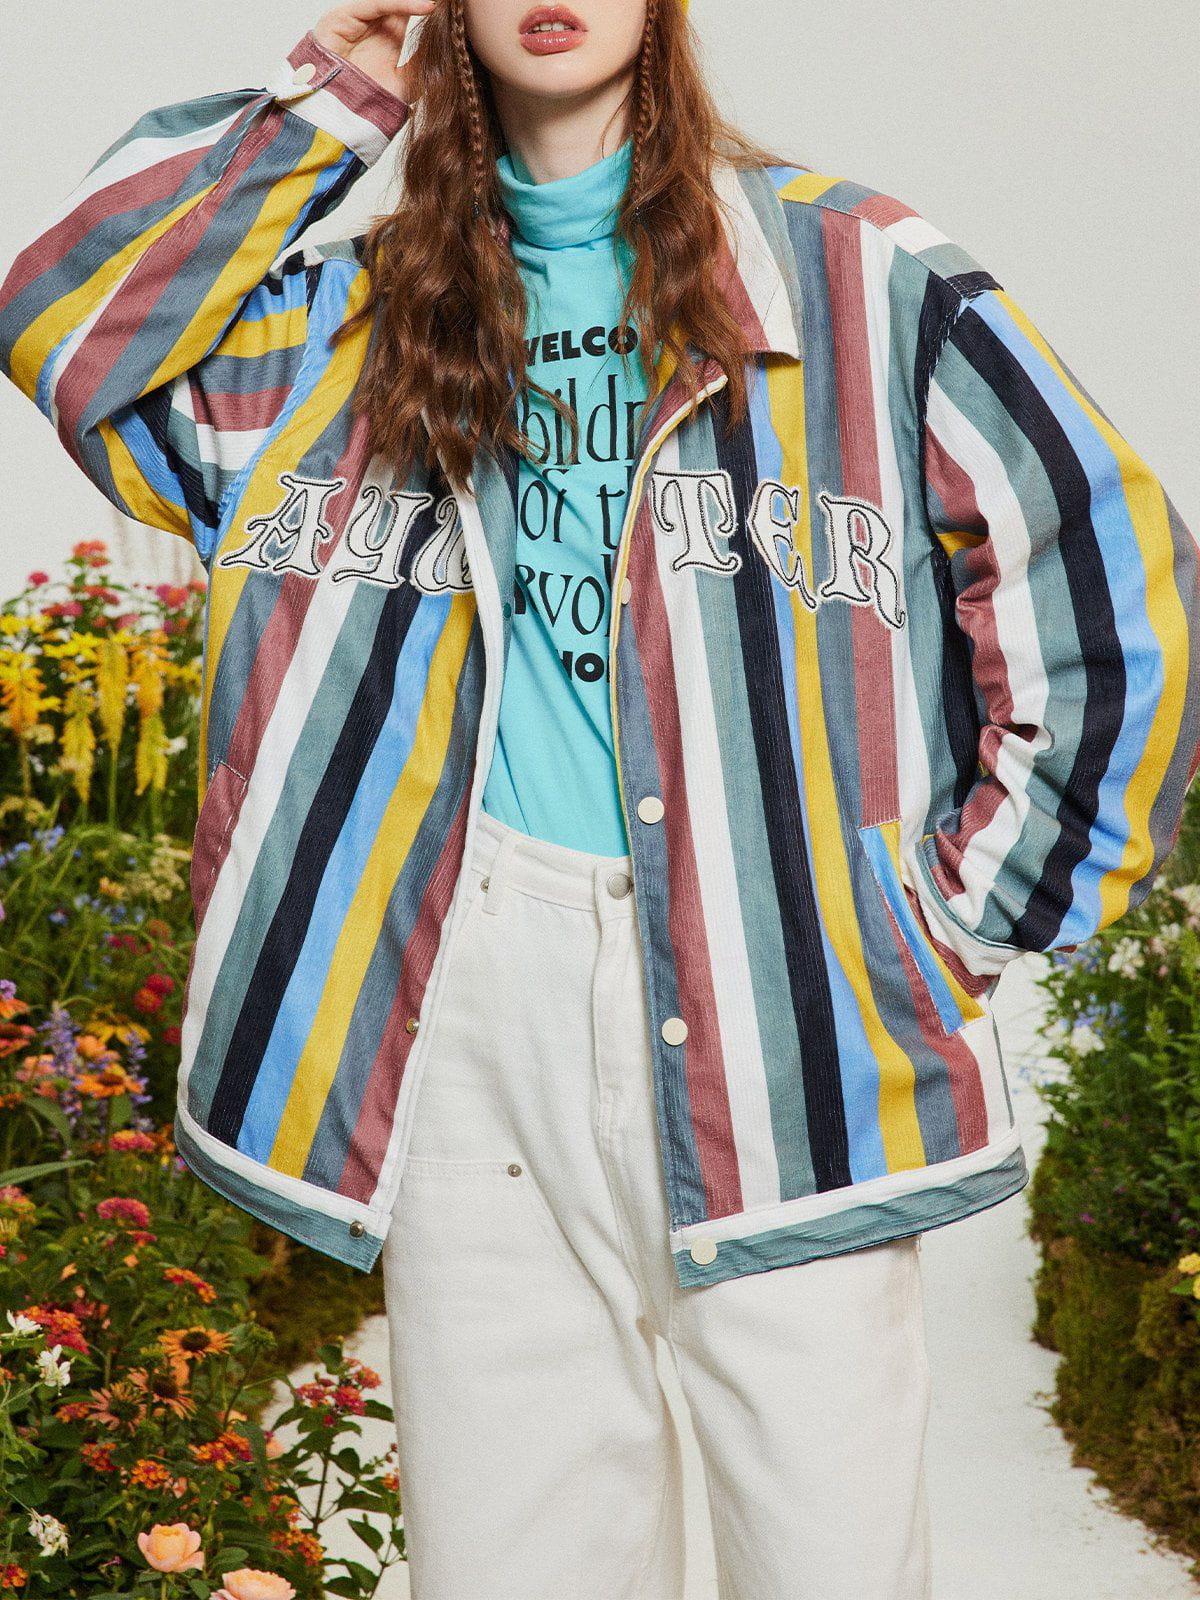 Majesda® - Colorful Vertical Stripes Corduroy Jacket outfit ideas, streetwear fashion - majesda.com